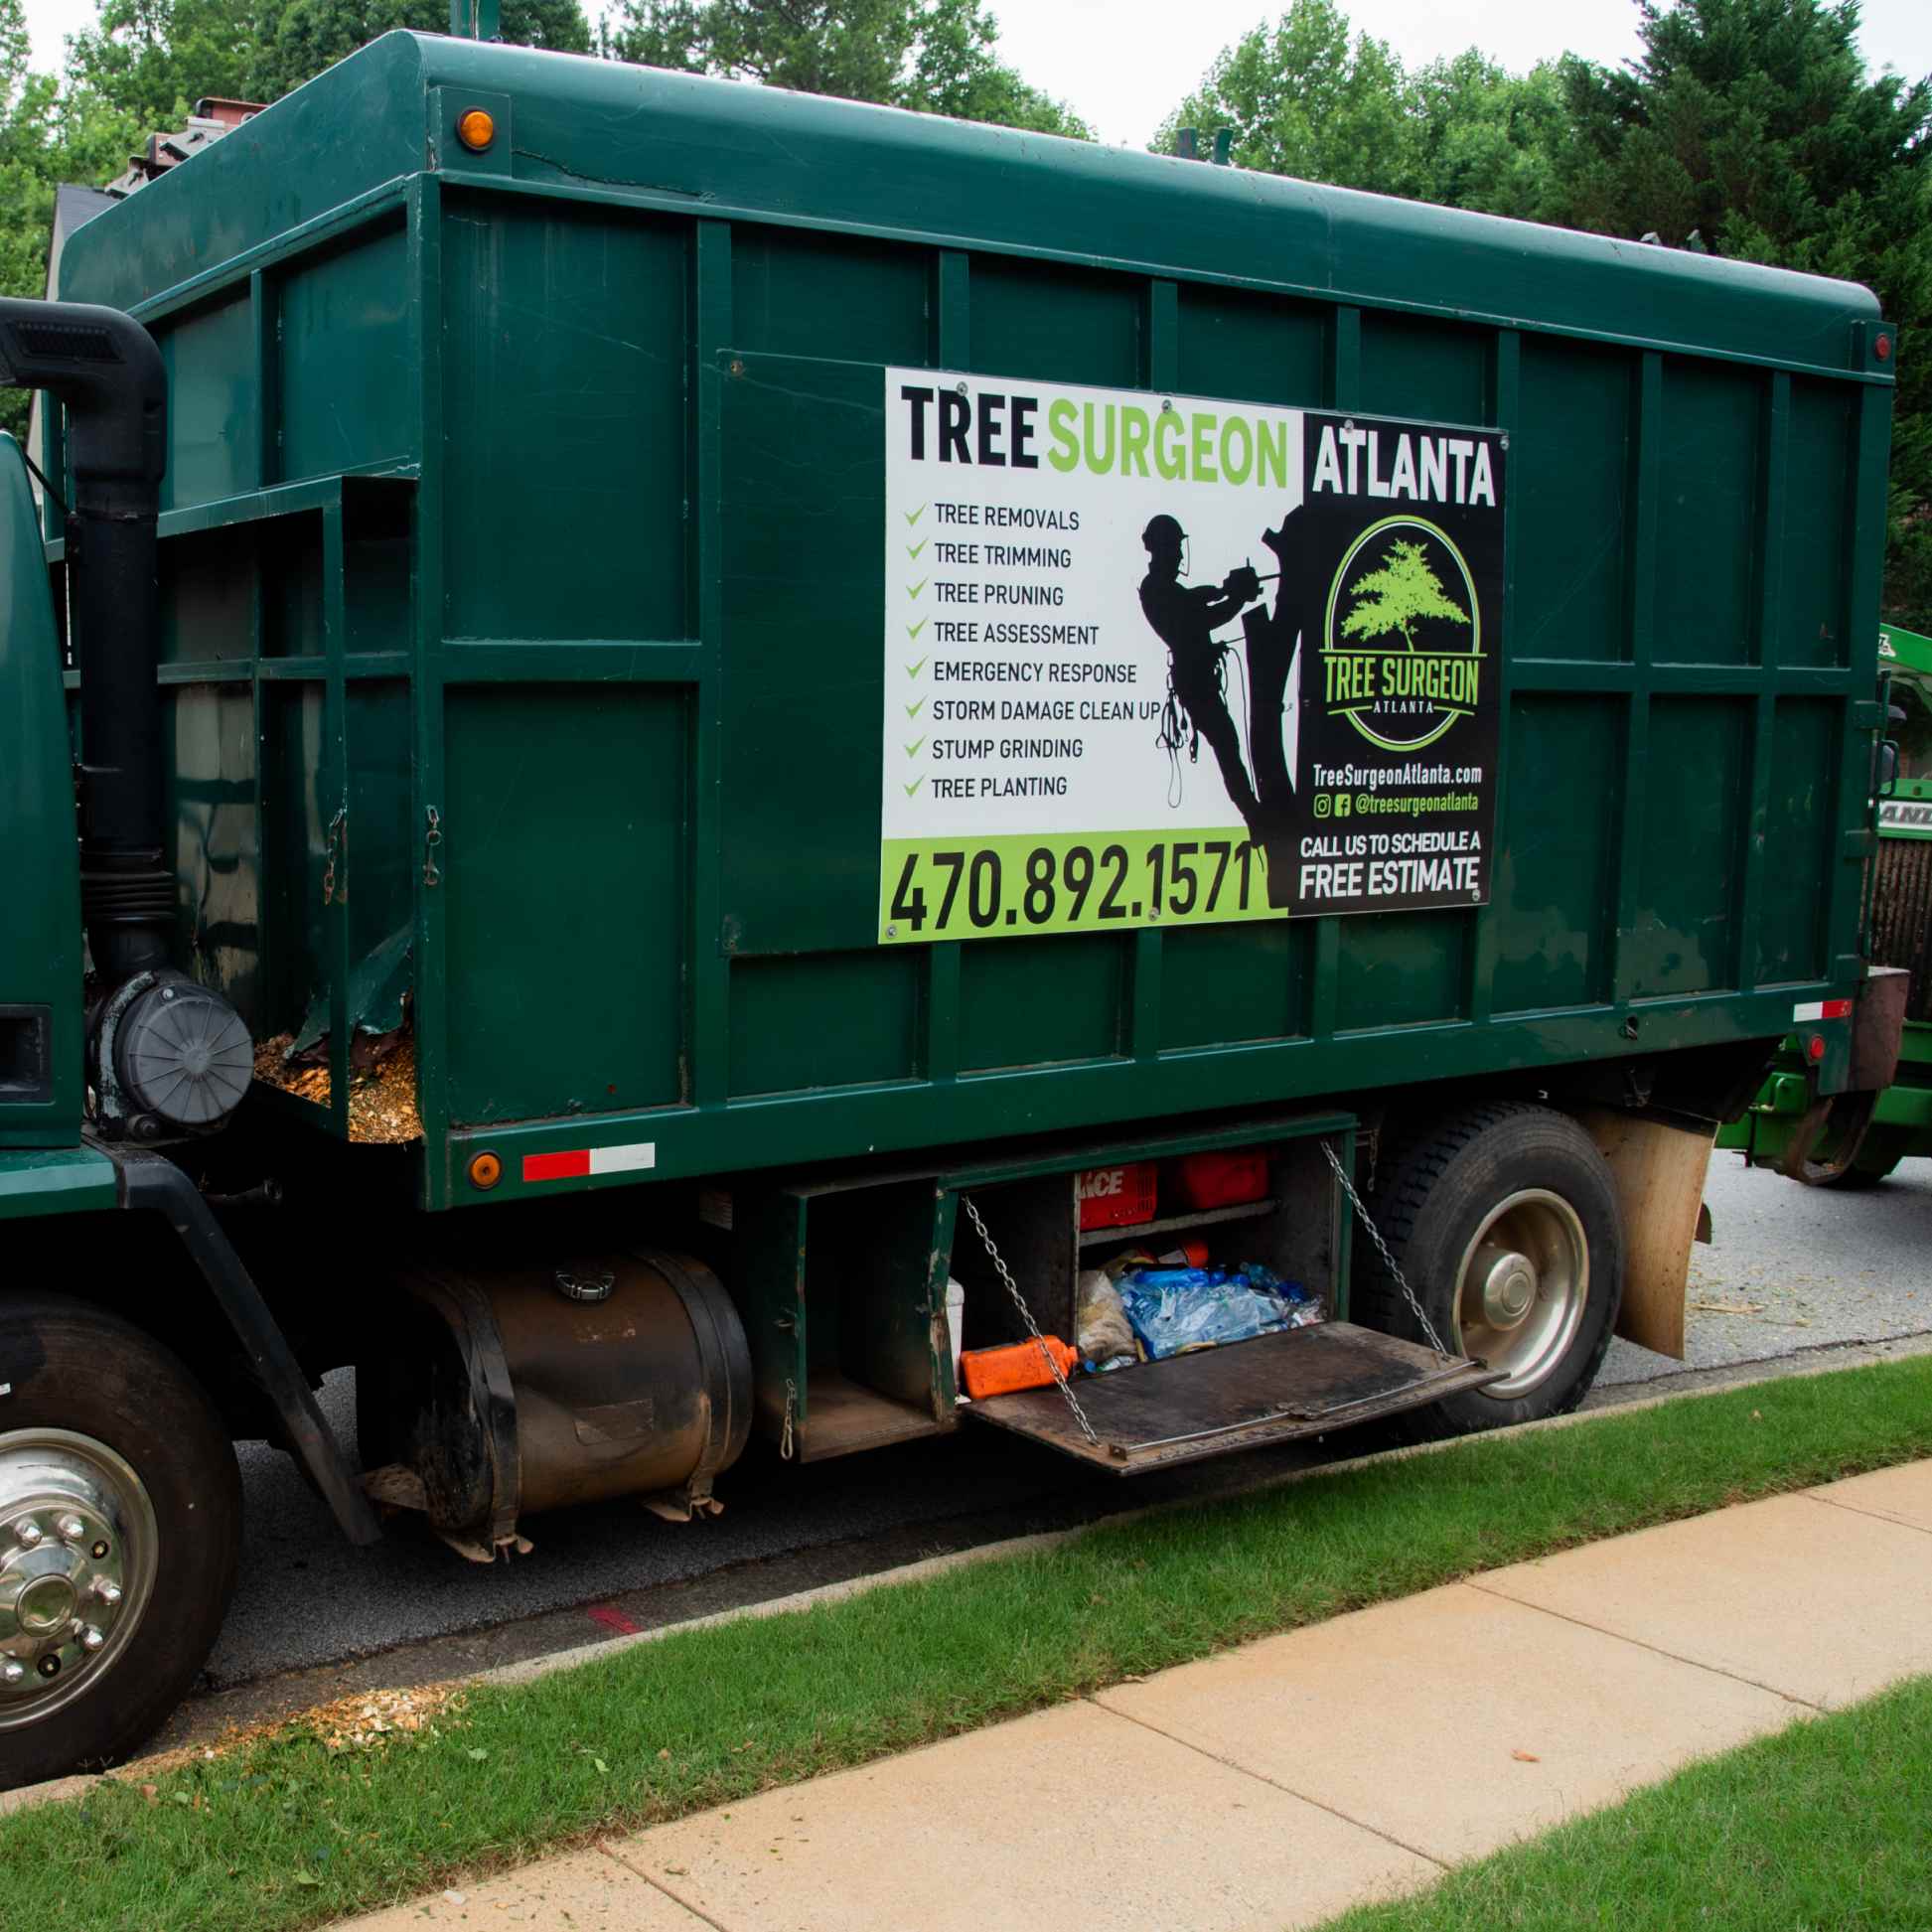 Tree Surgeon Atlanta LLC truck in buford ga